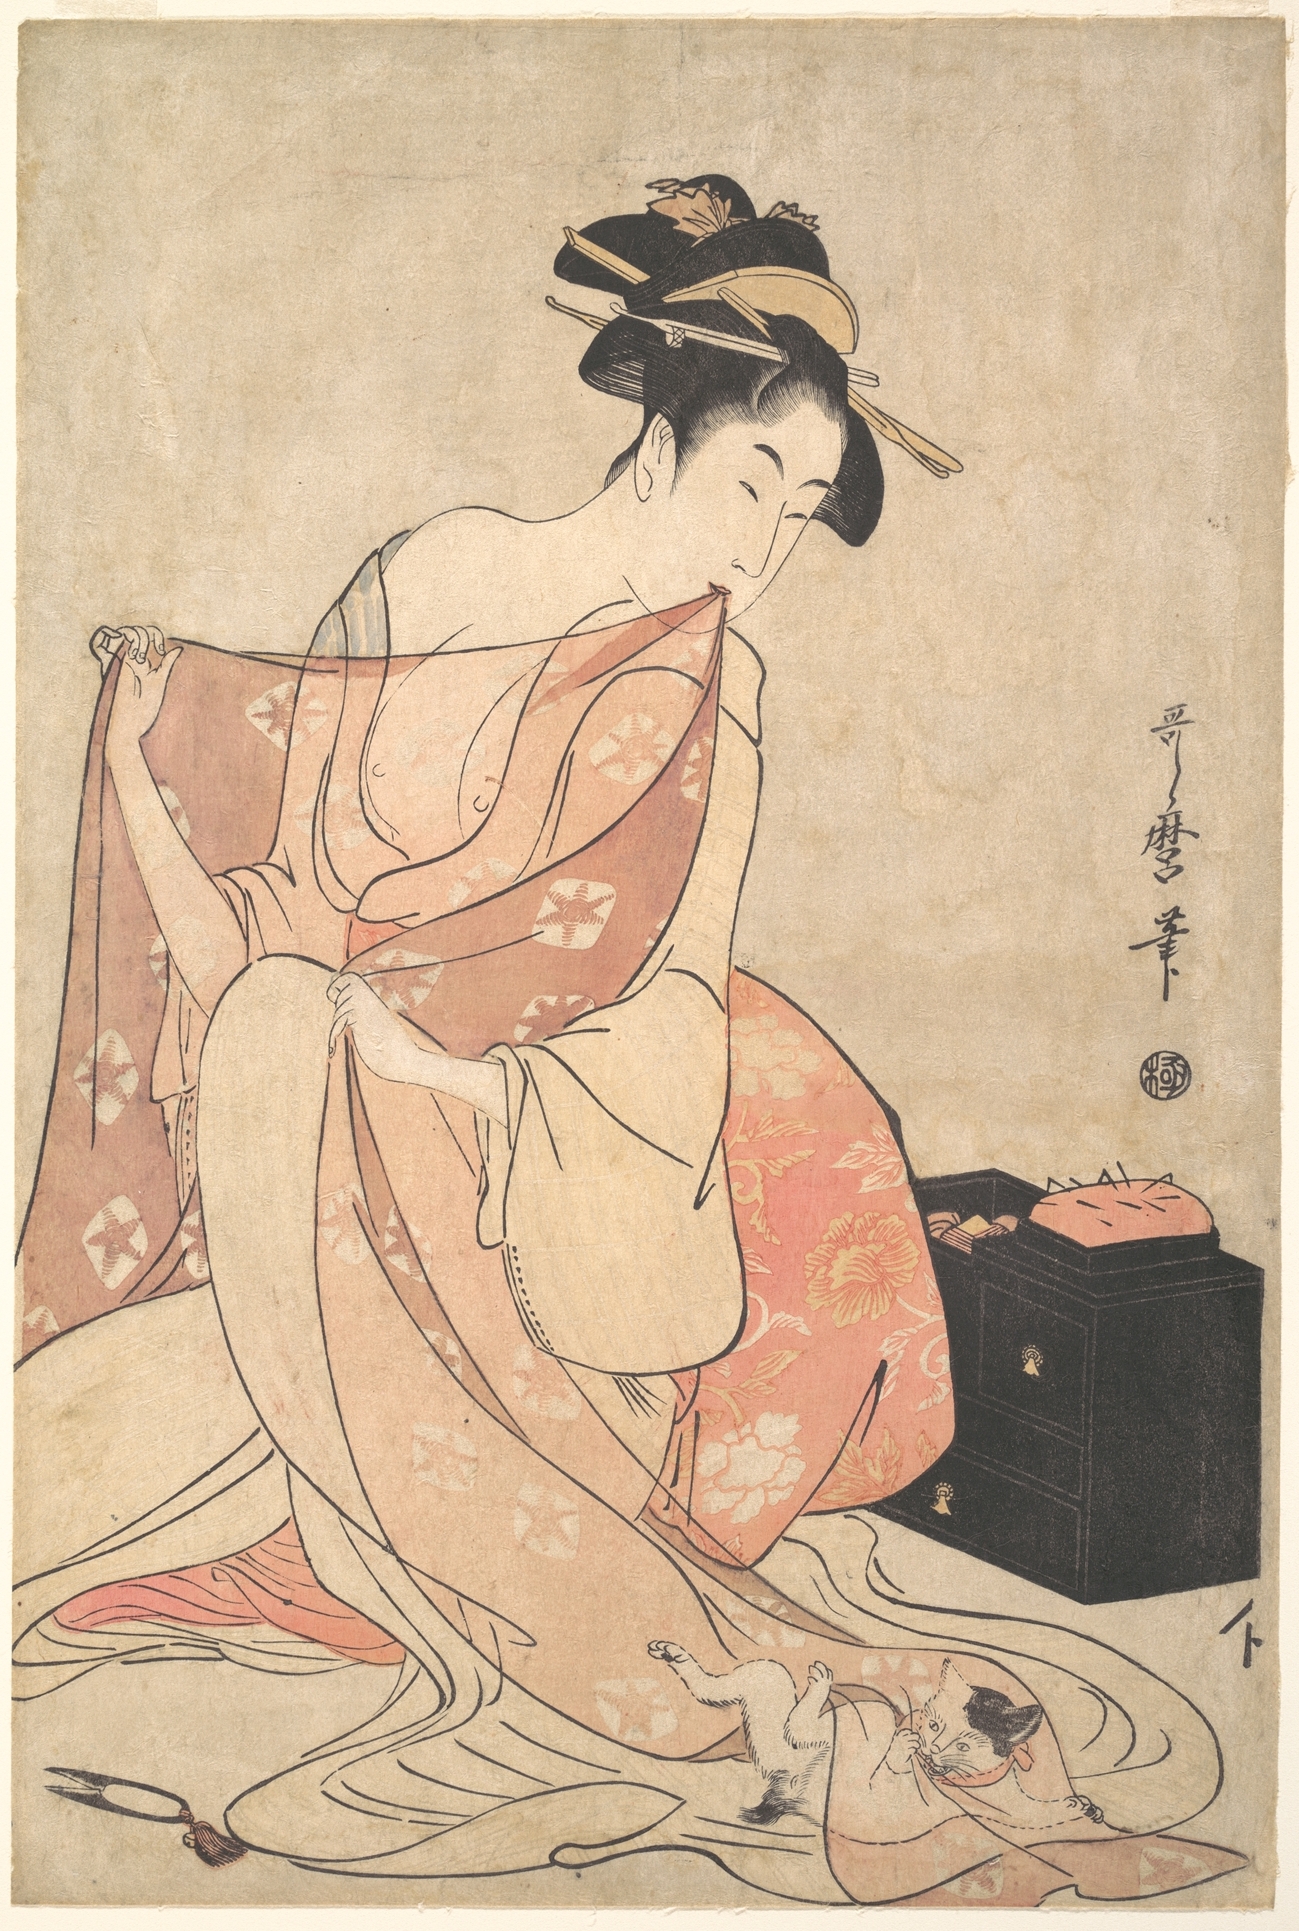 Mujer con un gato by Kitagawa Utamaro - ca. 1793–94 - 38.4 x 25.9 cm Museo Metropolitano de Arte